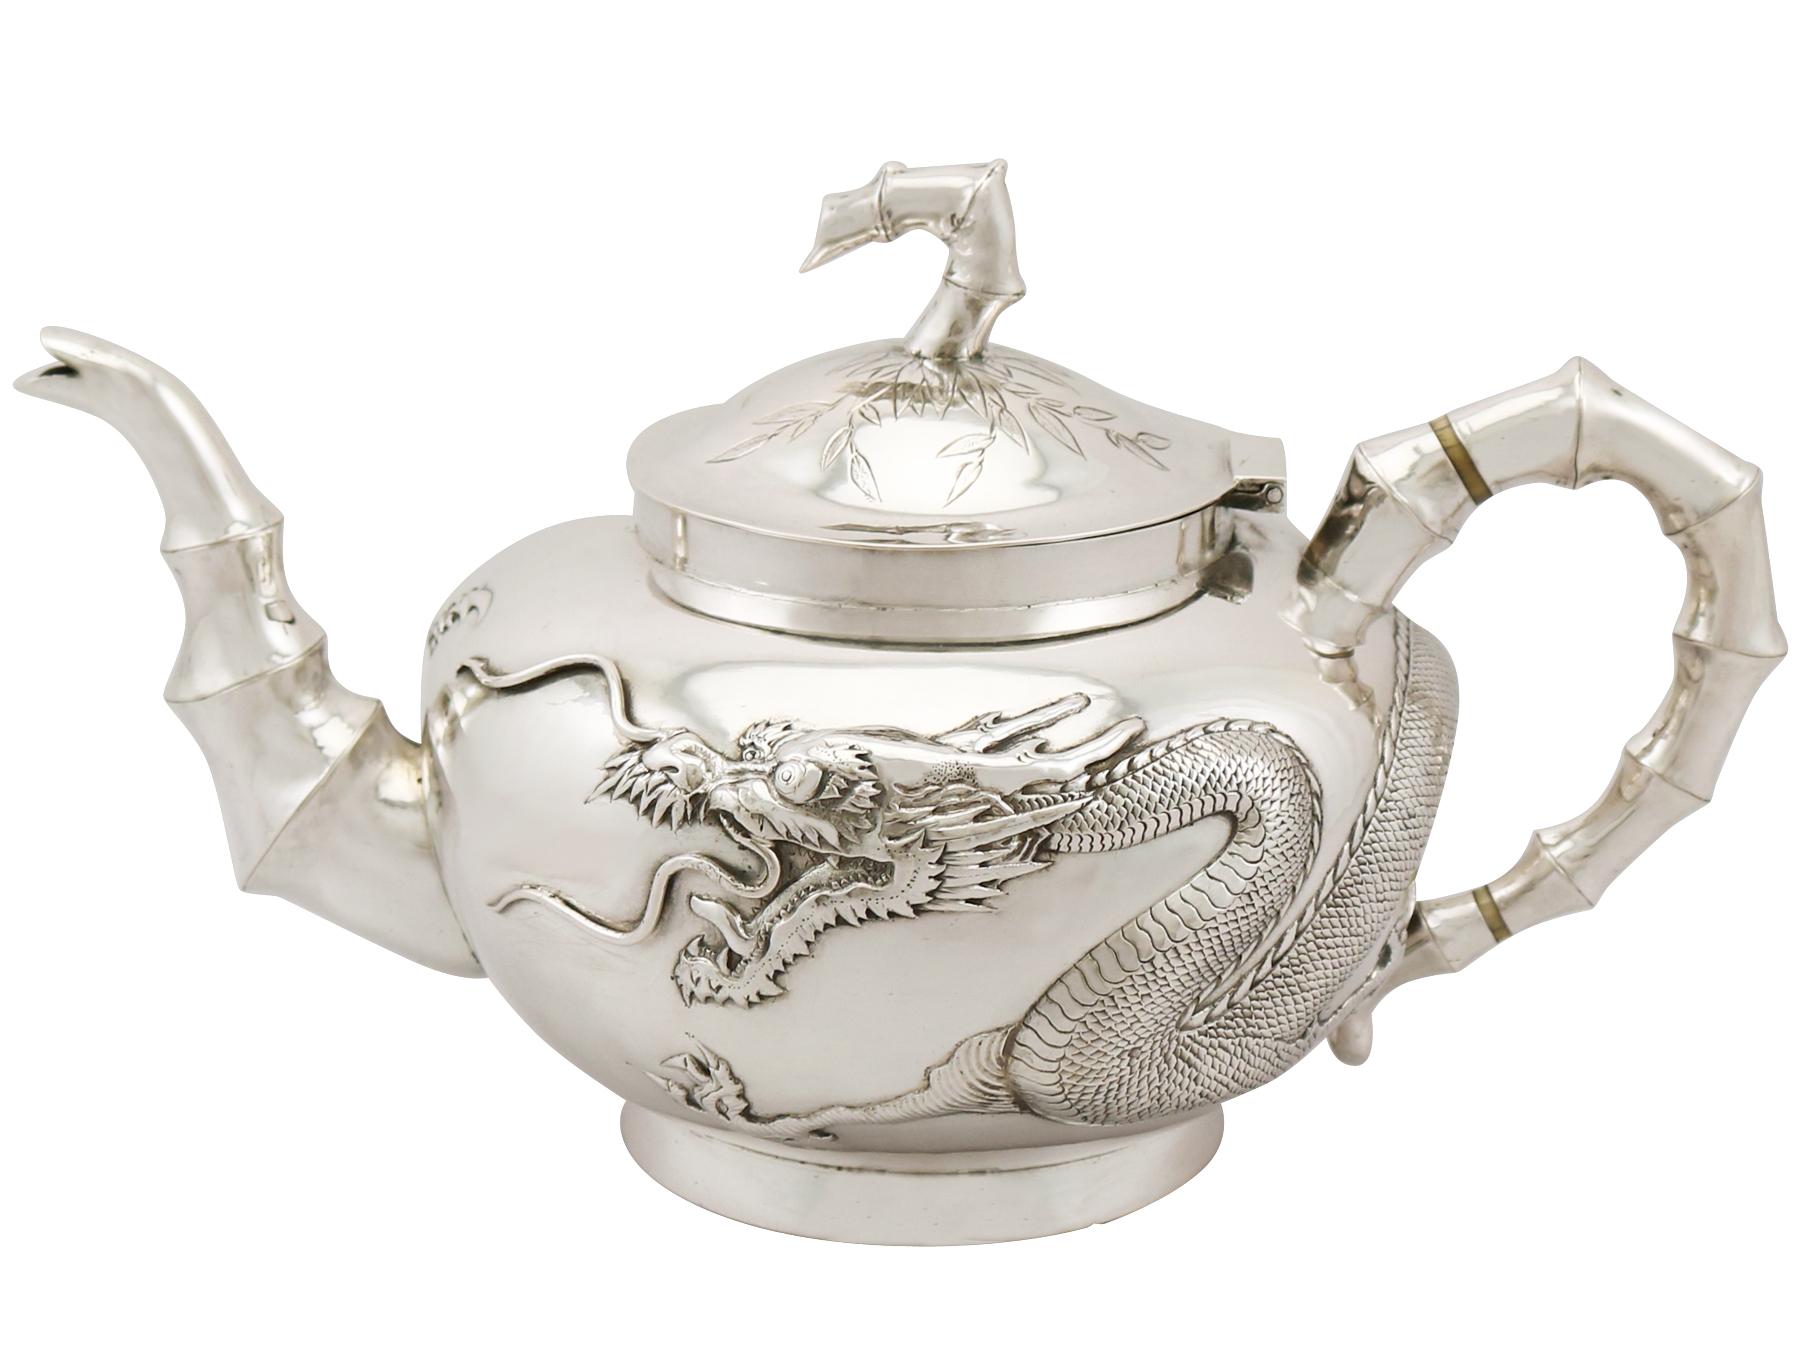 19th Century Chinese Export Silver Three-Piece Tea Service, Antique, circa 1870